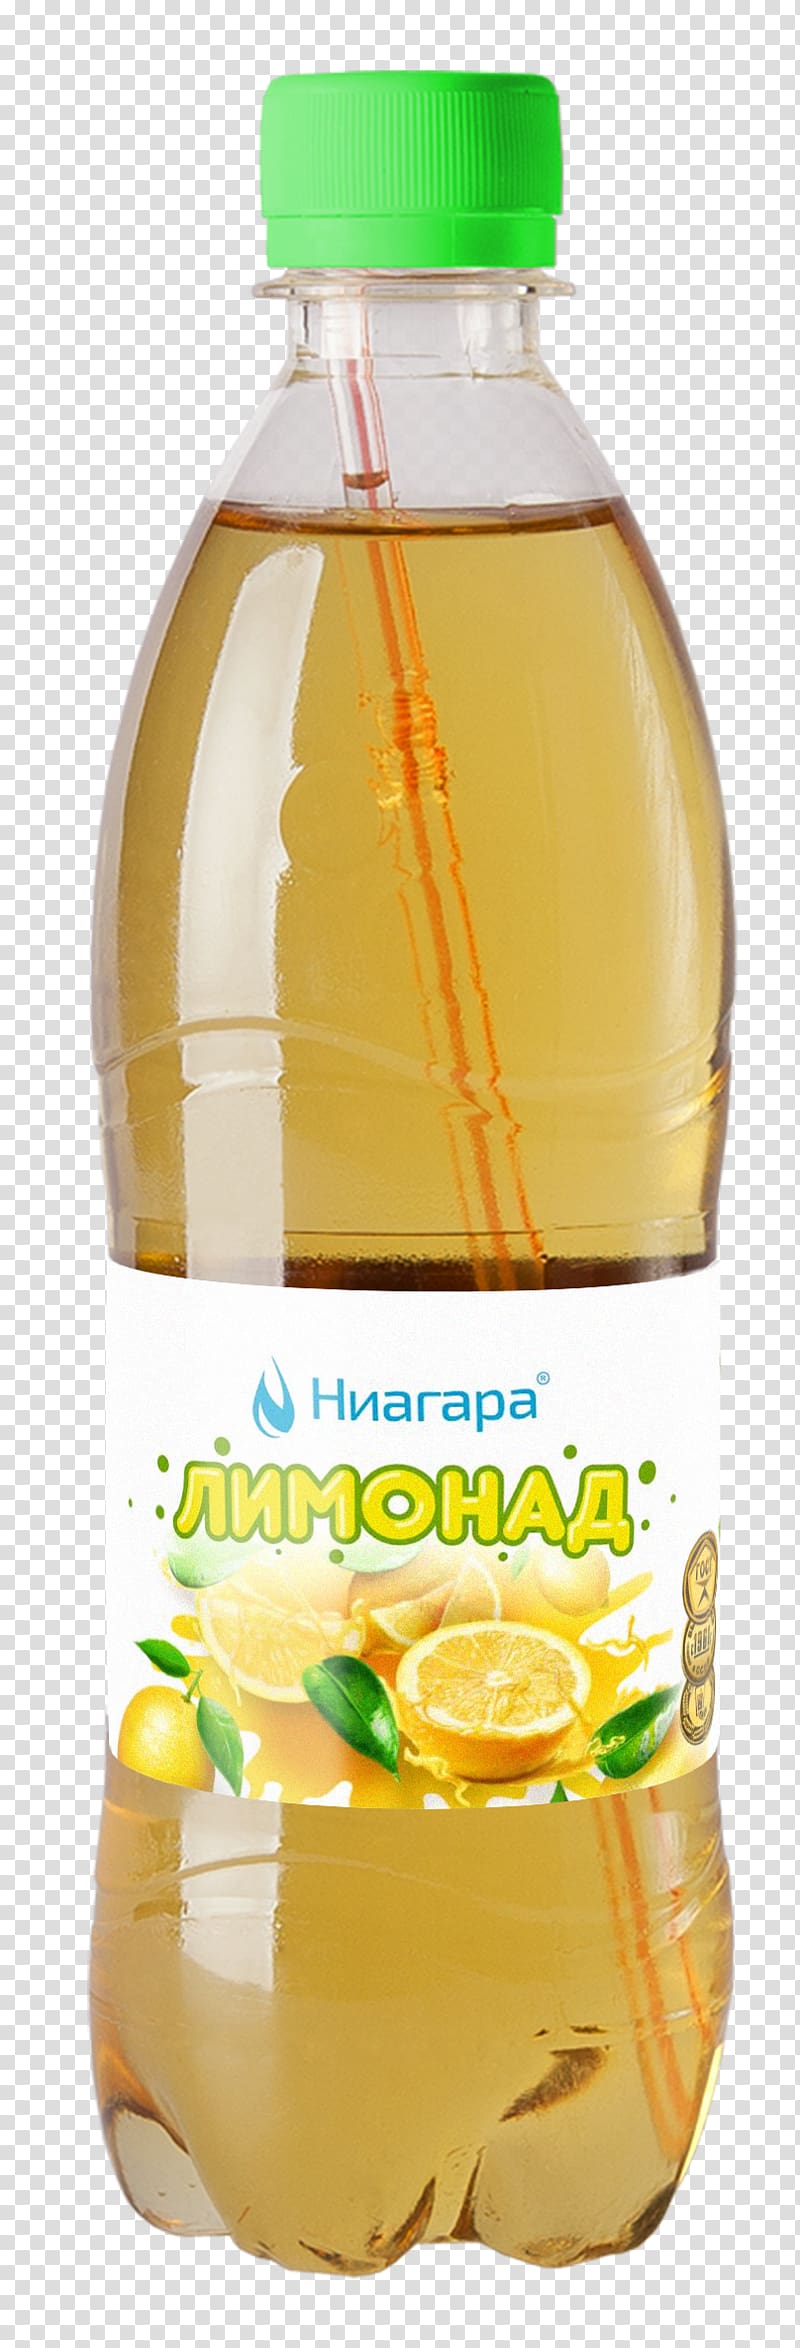 Carbonated water Lemonade Дюшес Drink Juice, lemonade transparent background PNG clipart